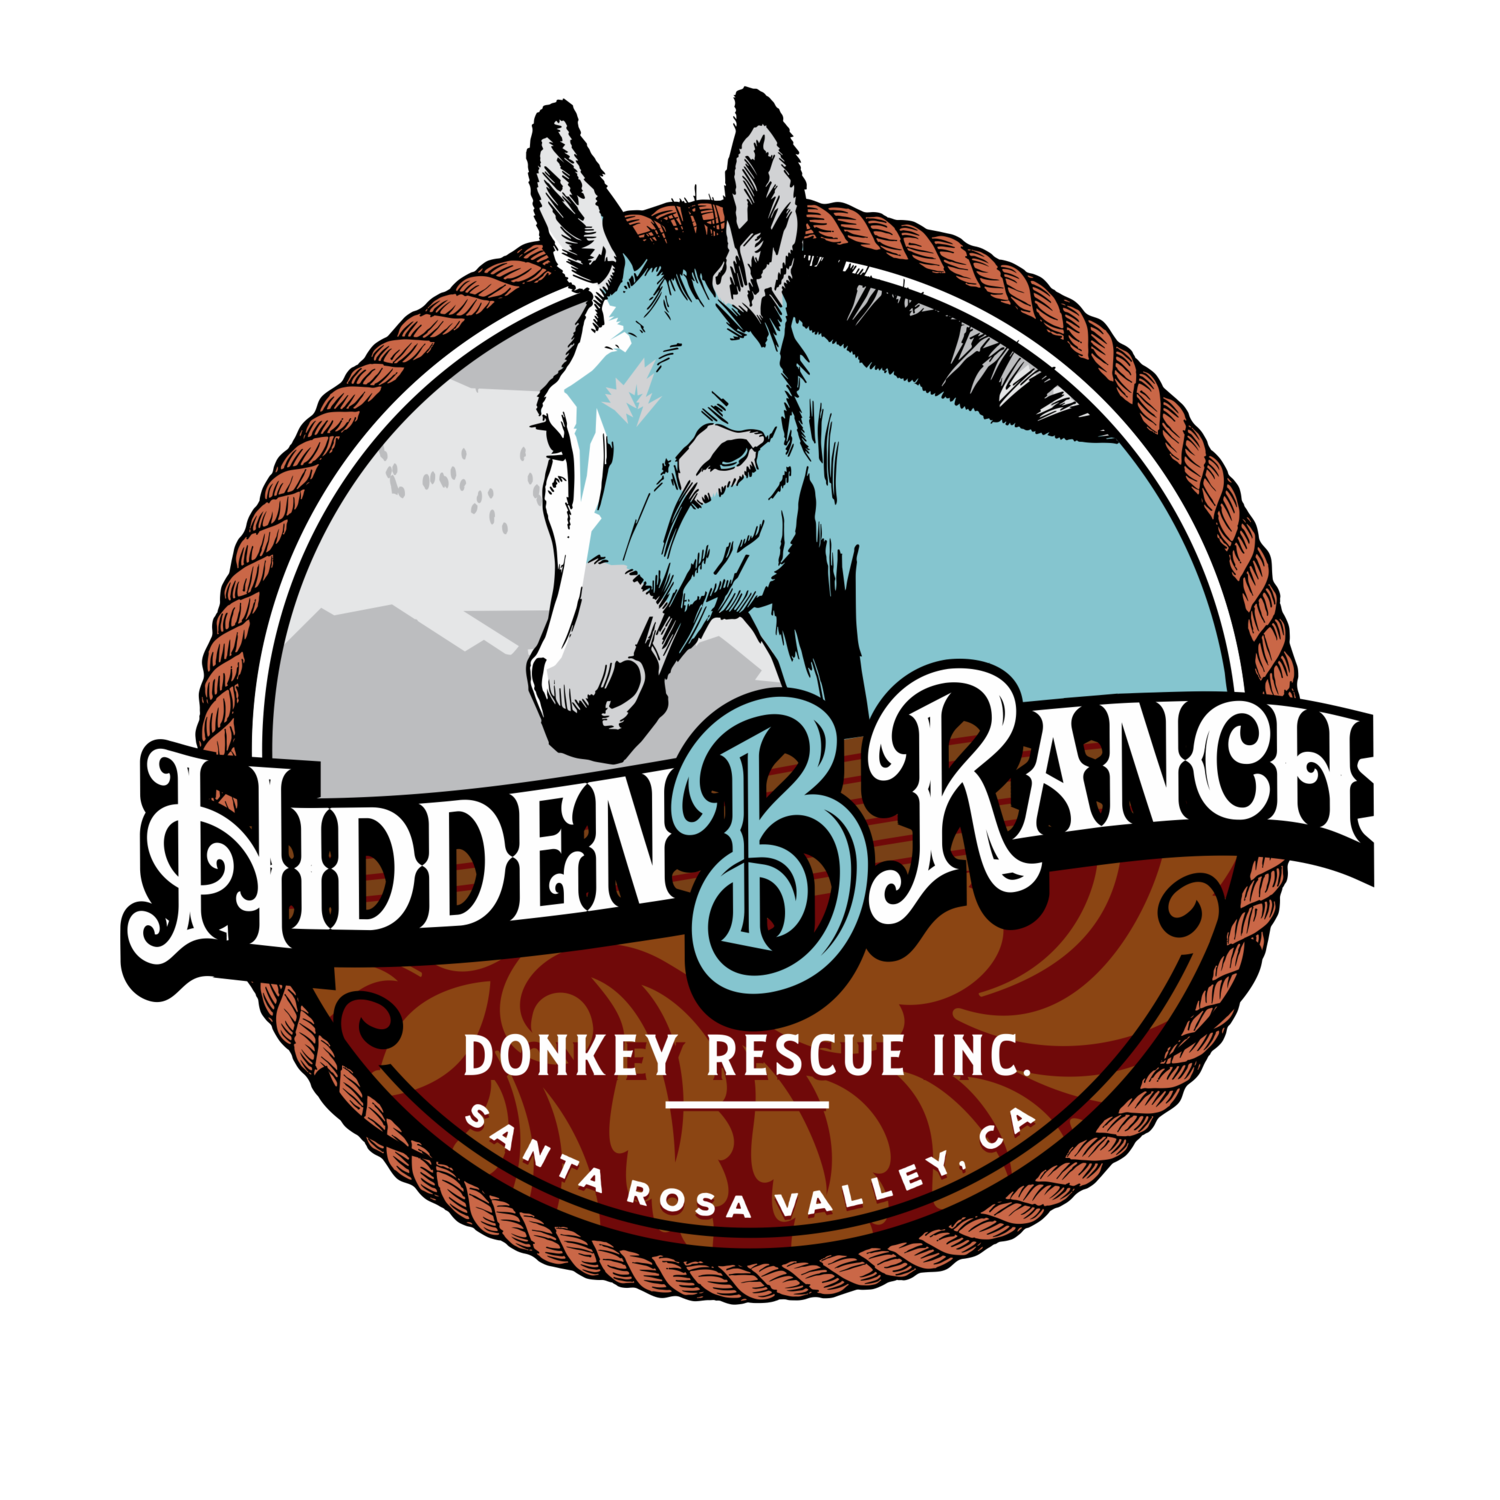 Hidden B Ranch Donkey Rescue Inc.